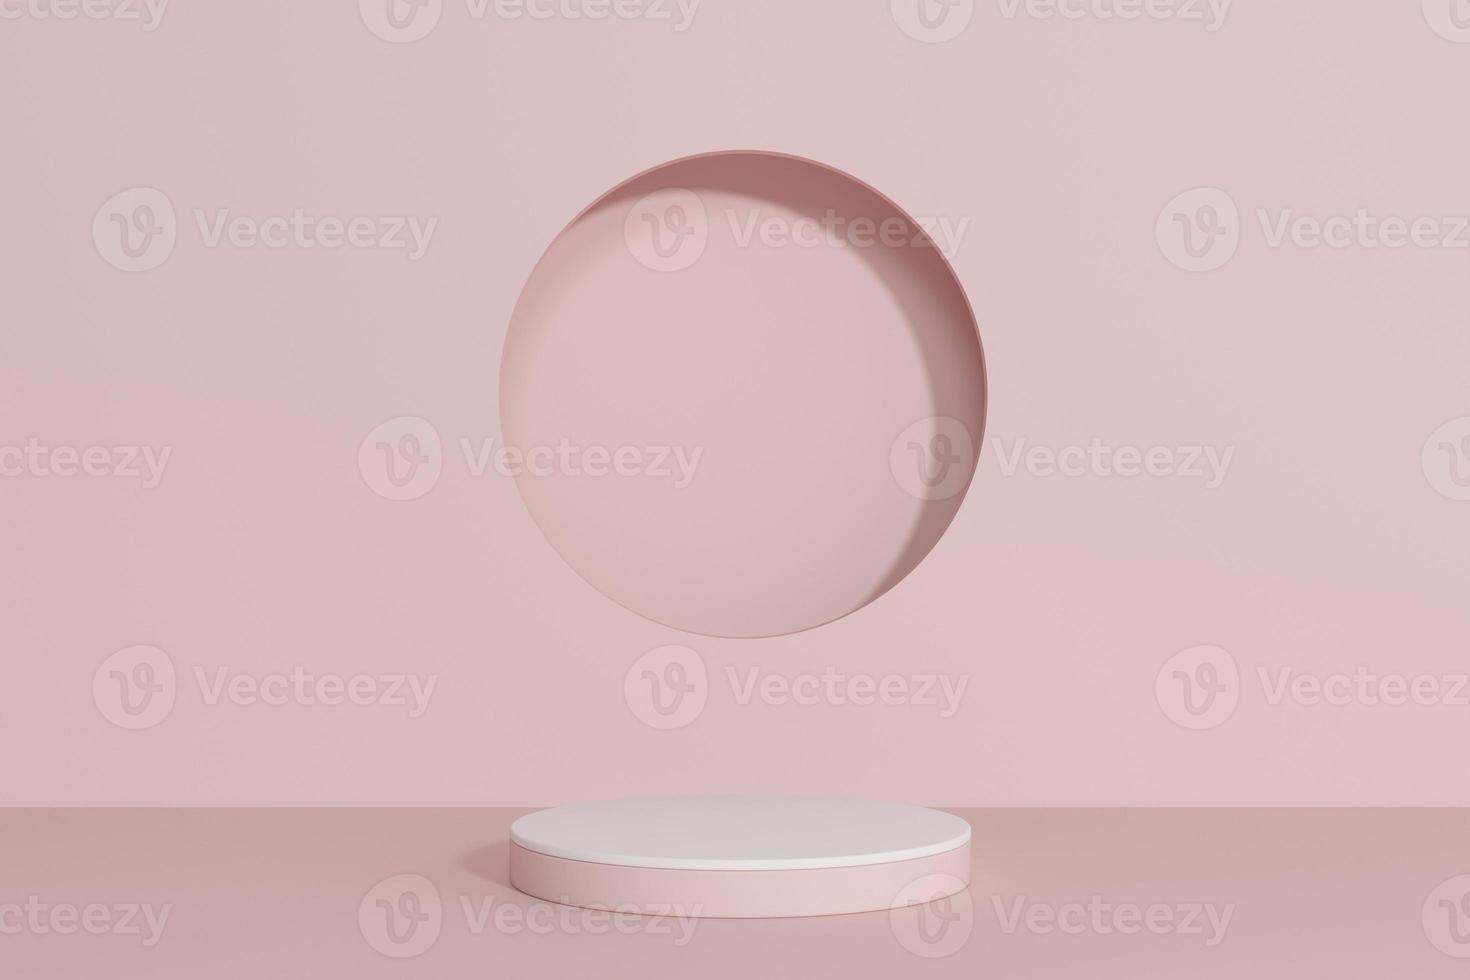 wit en roze podium met ronde cirkel venster achtergrond foto